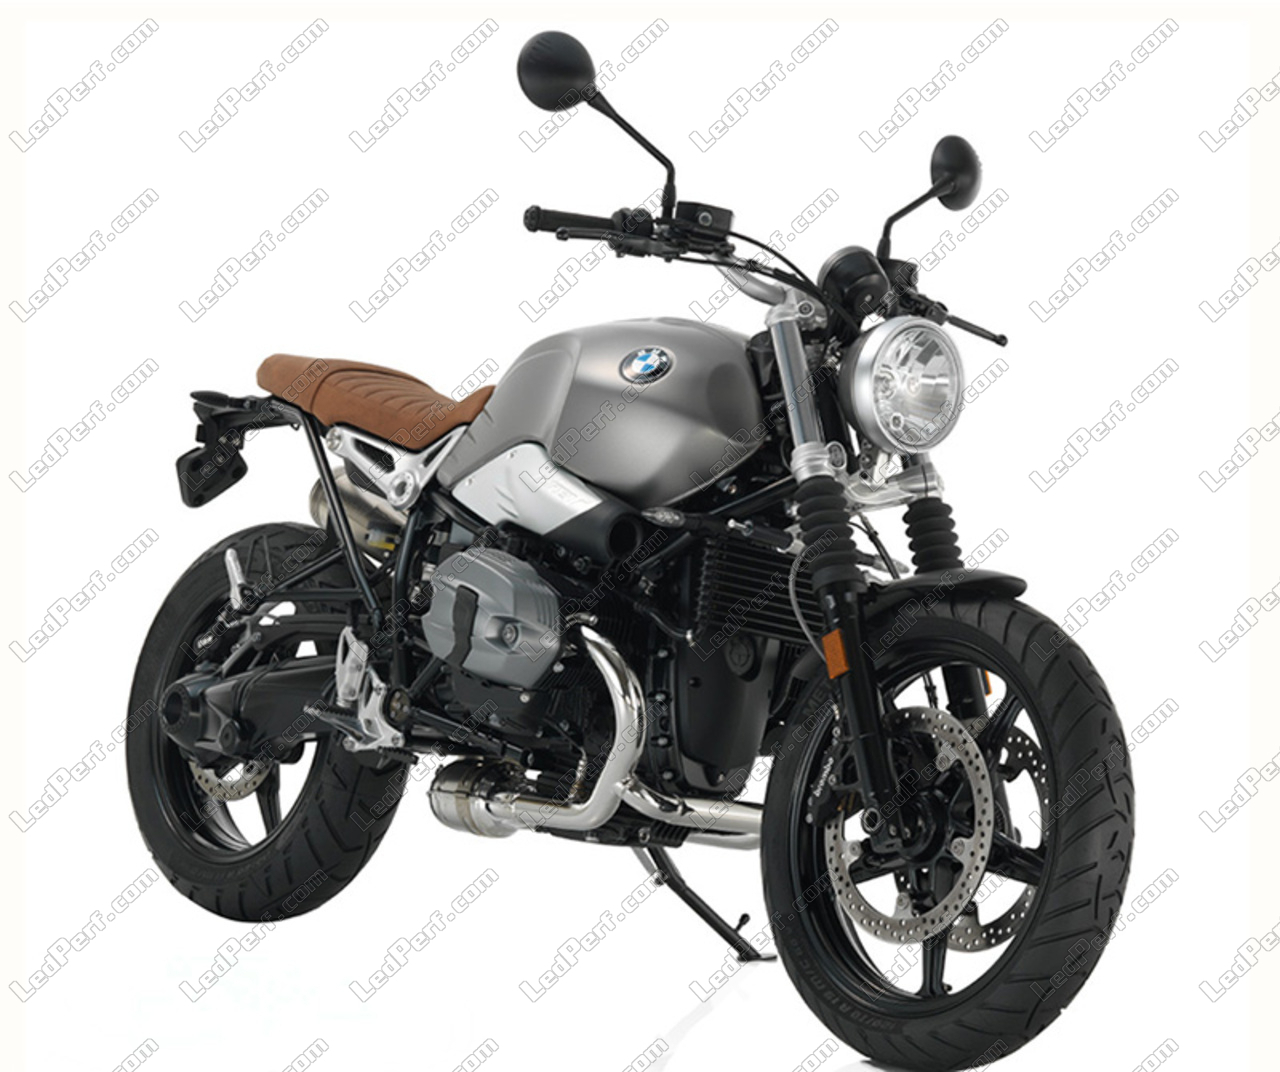 https://www.ledperf.us/images/models/ledperf.com/._1/led-bulb-kit-for-bmw-motorrad-r-nine-t-scrambler-motorcycle_63446.jpg